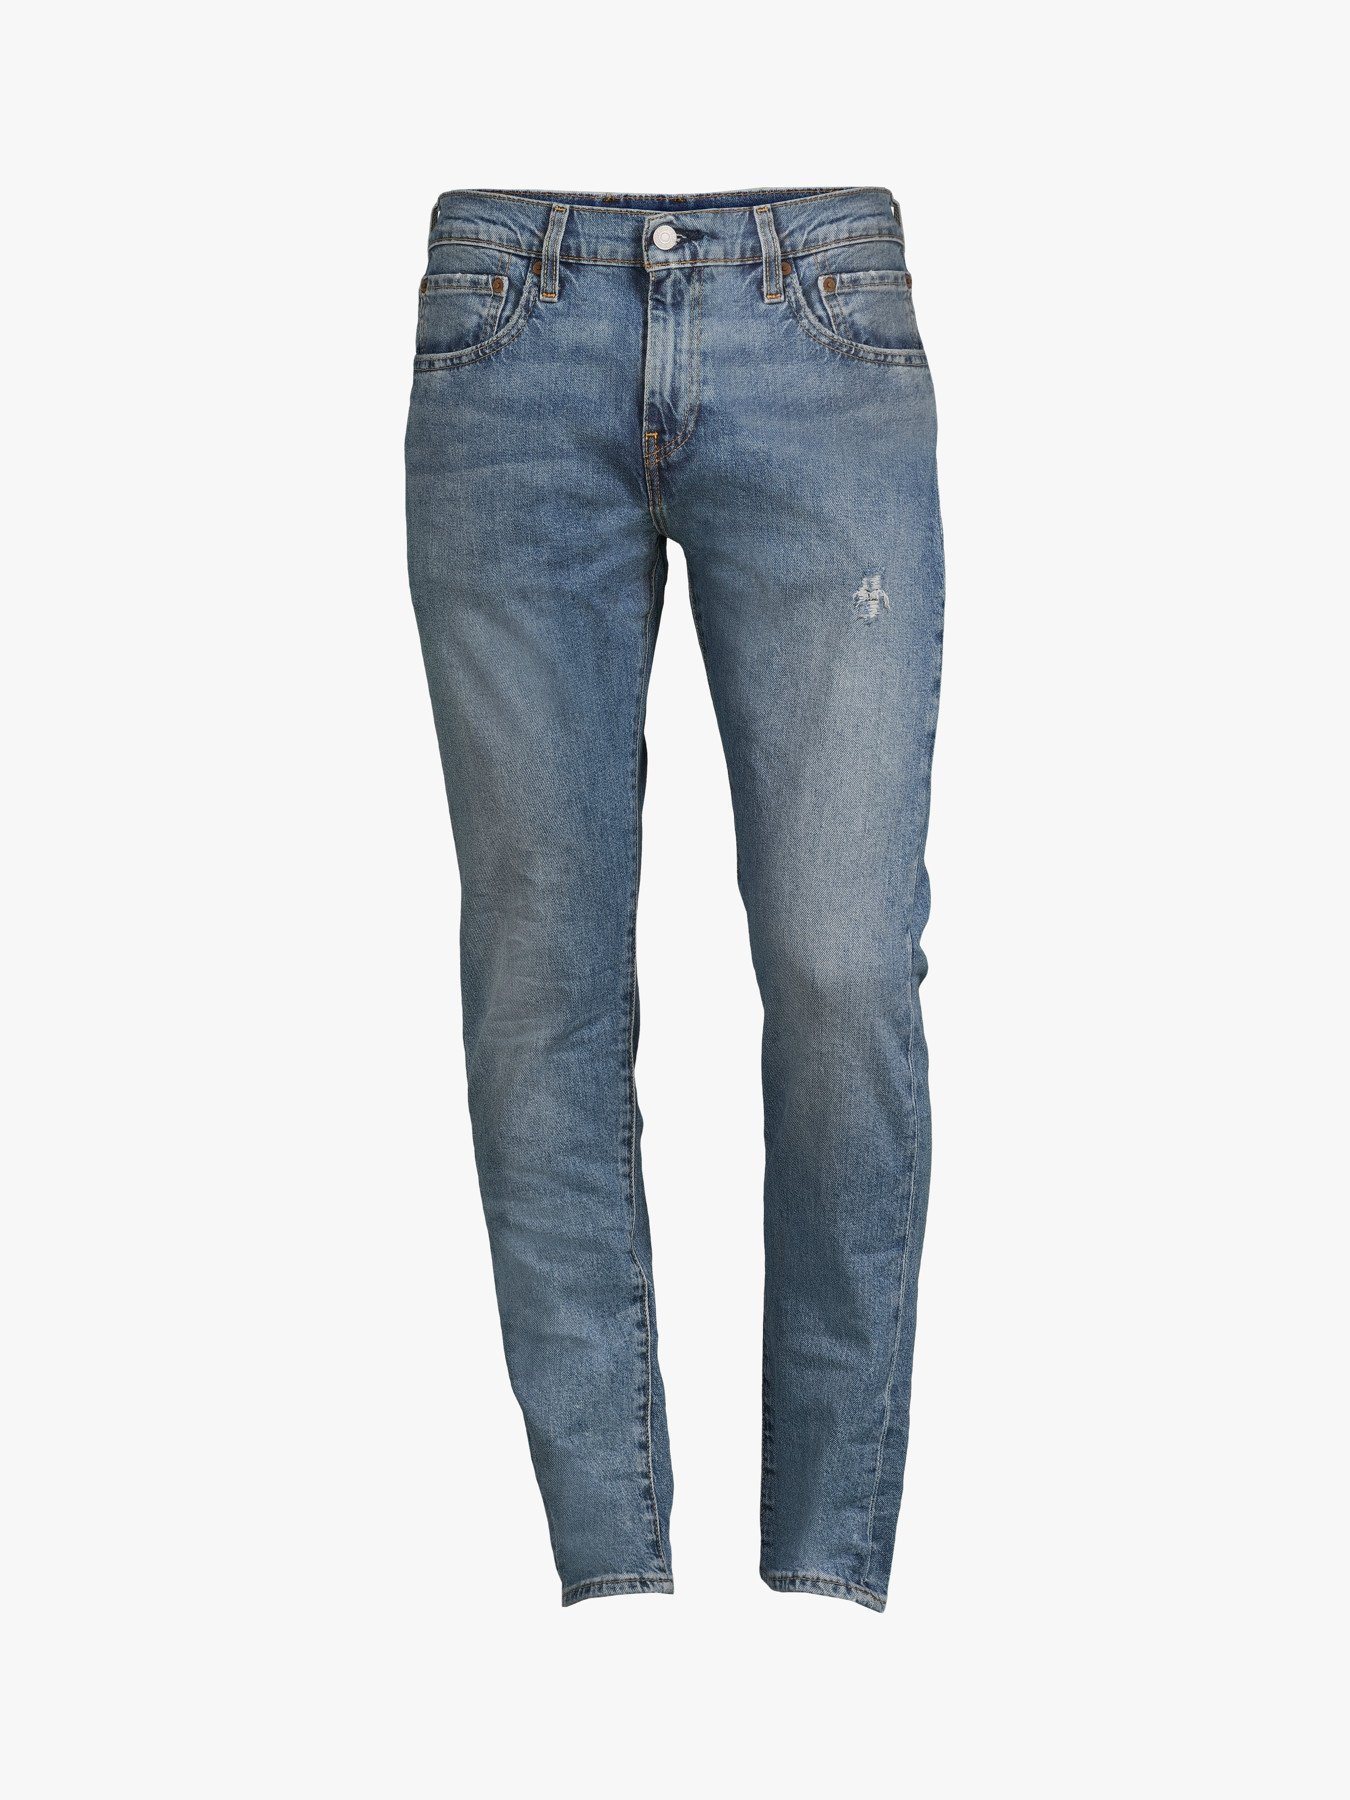 Levi's 512 Slim Taper Jeans | Tapered | Fenwick